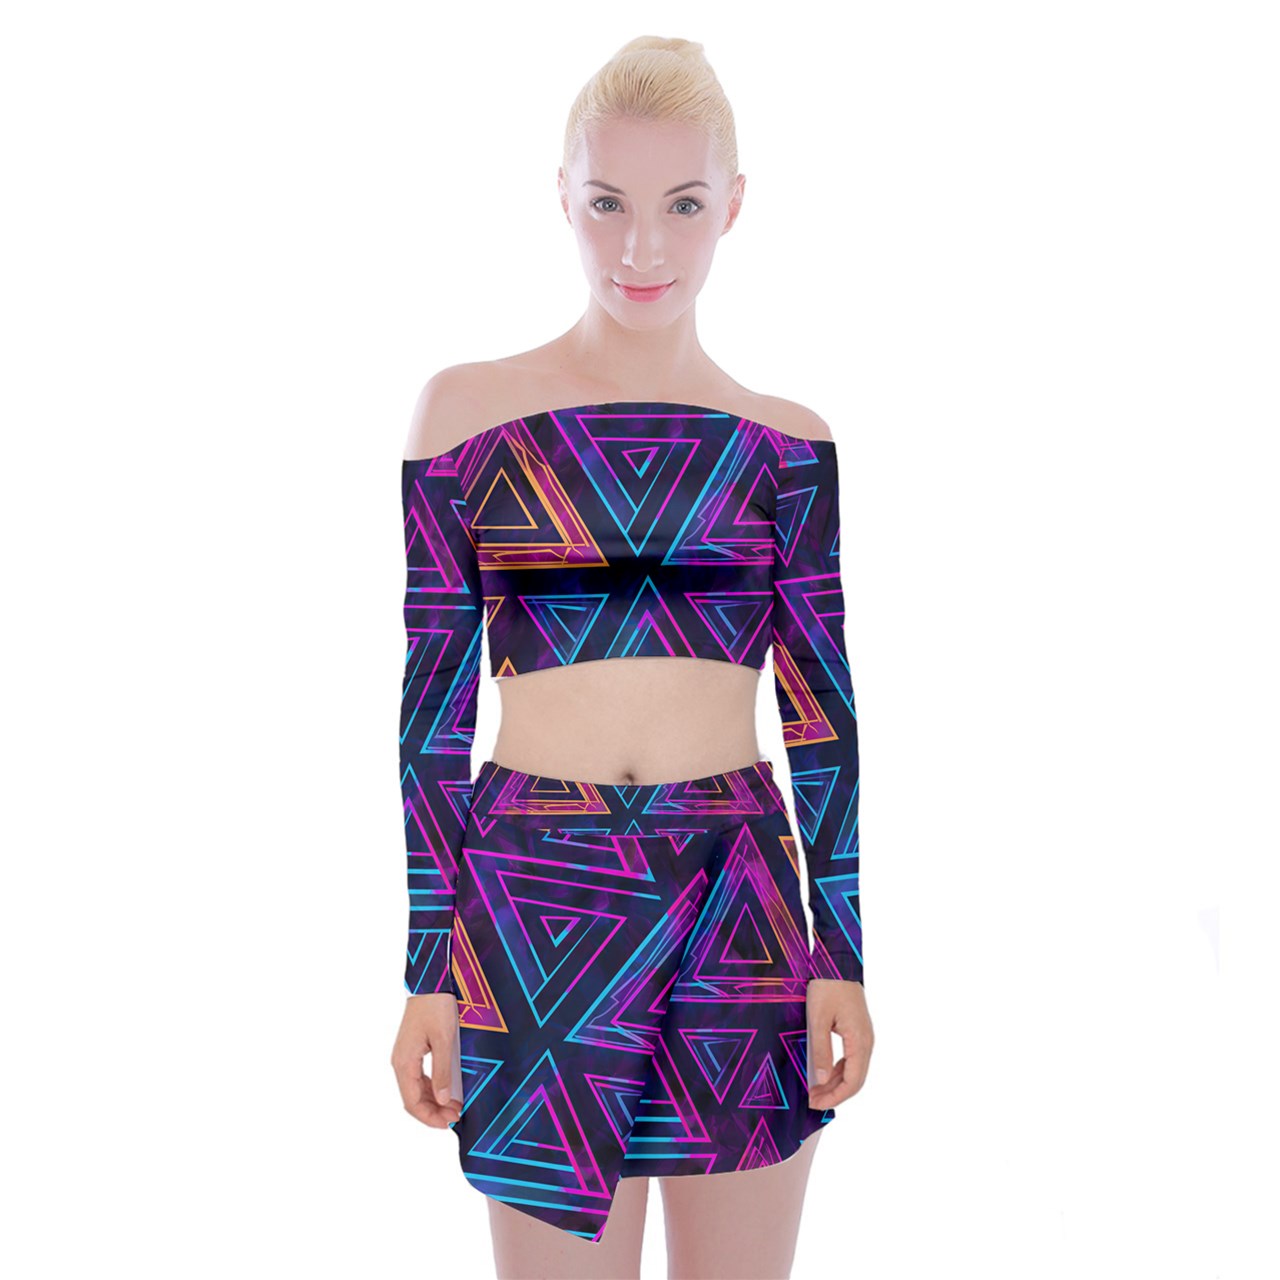 Triangular Prism Off Shoulder Top with Mini Skirt Set - Mila Beachwear